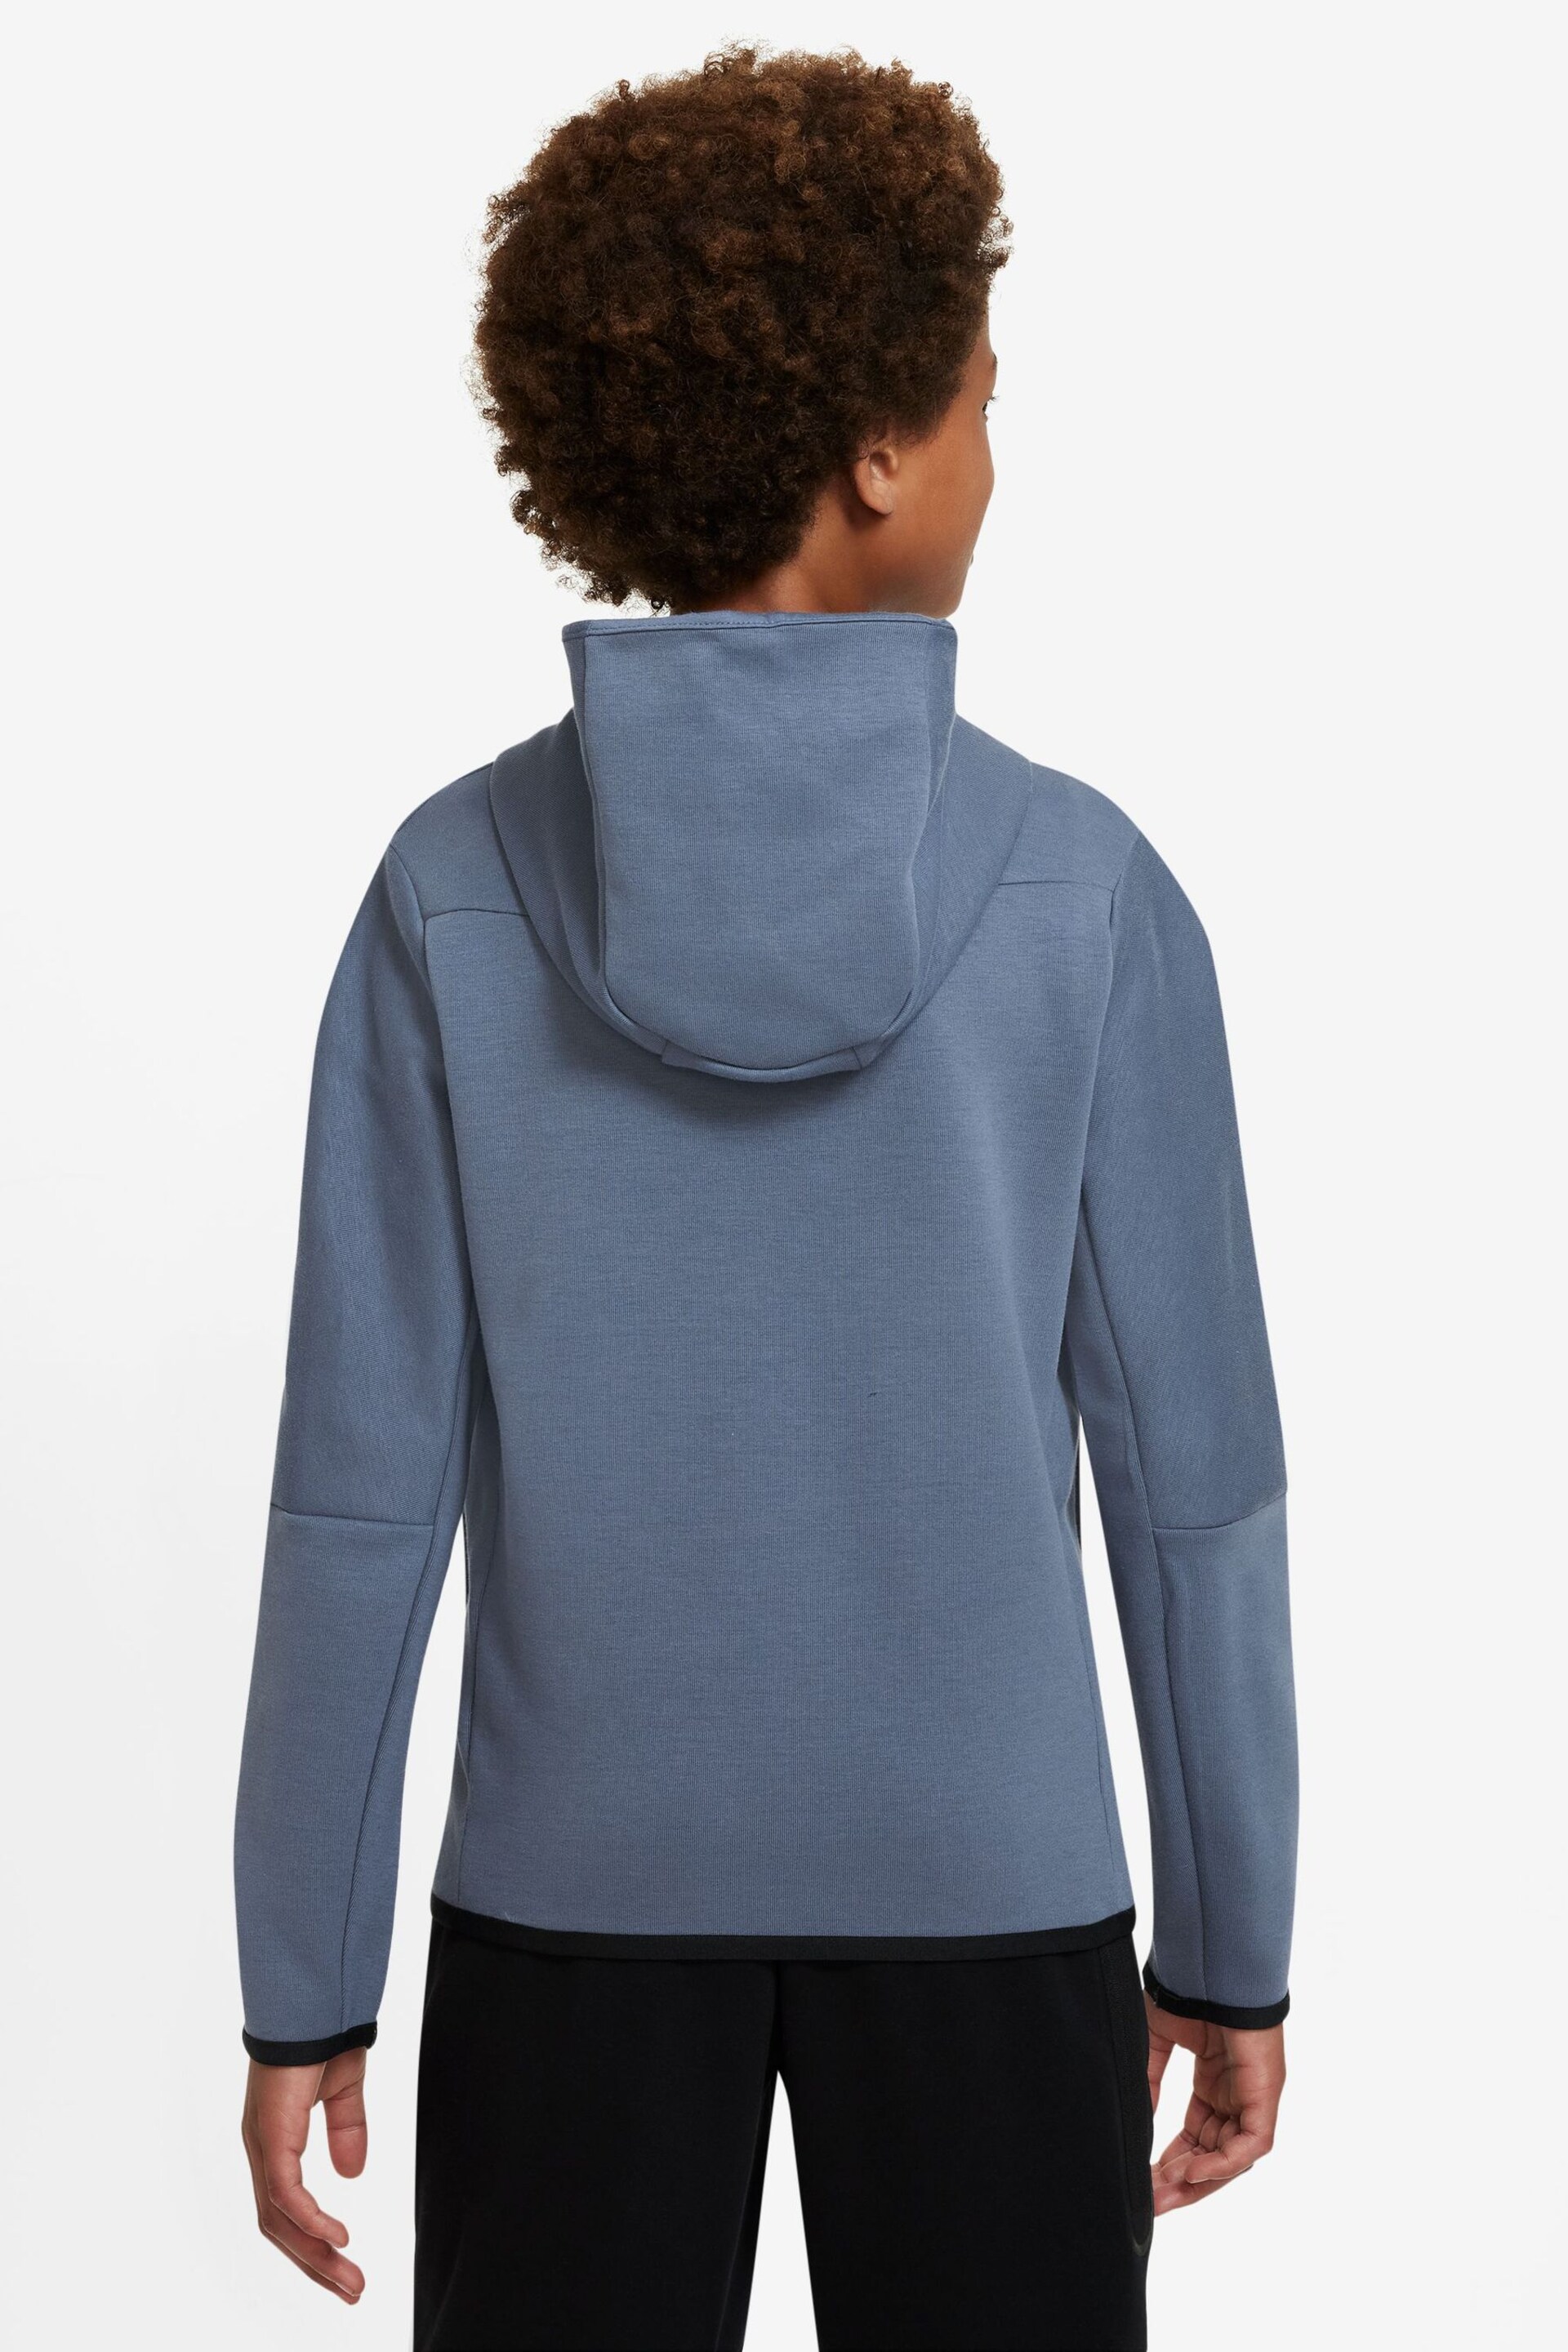 Nike Blue Tech Fleece Hoodie - Image 2 of 3